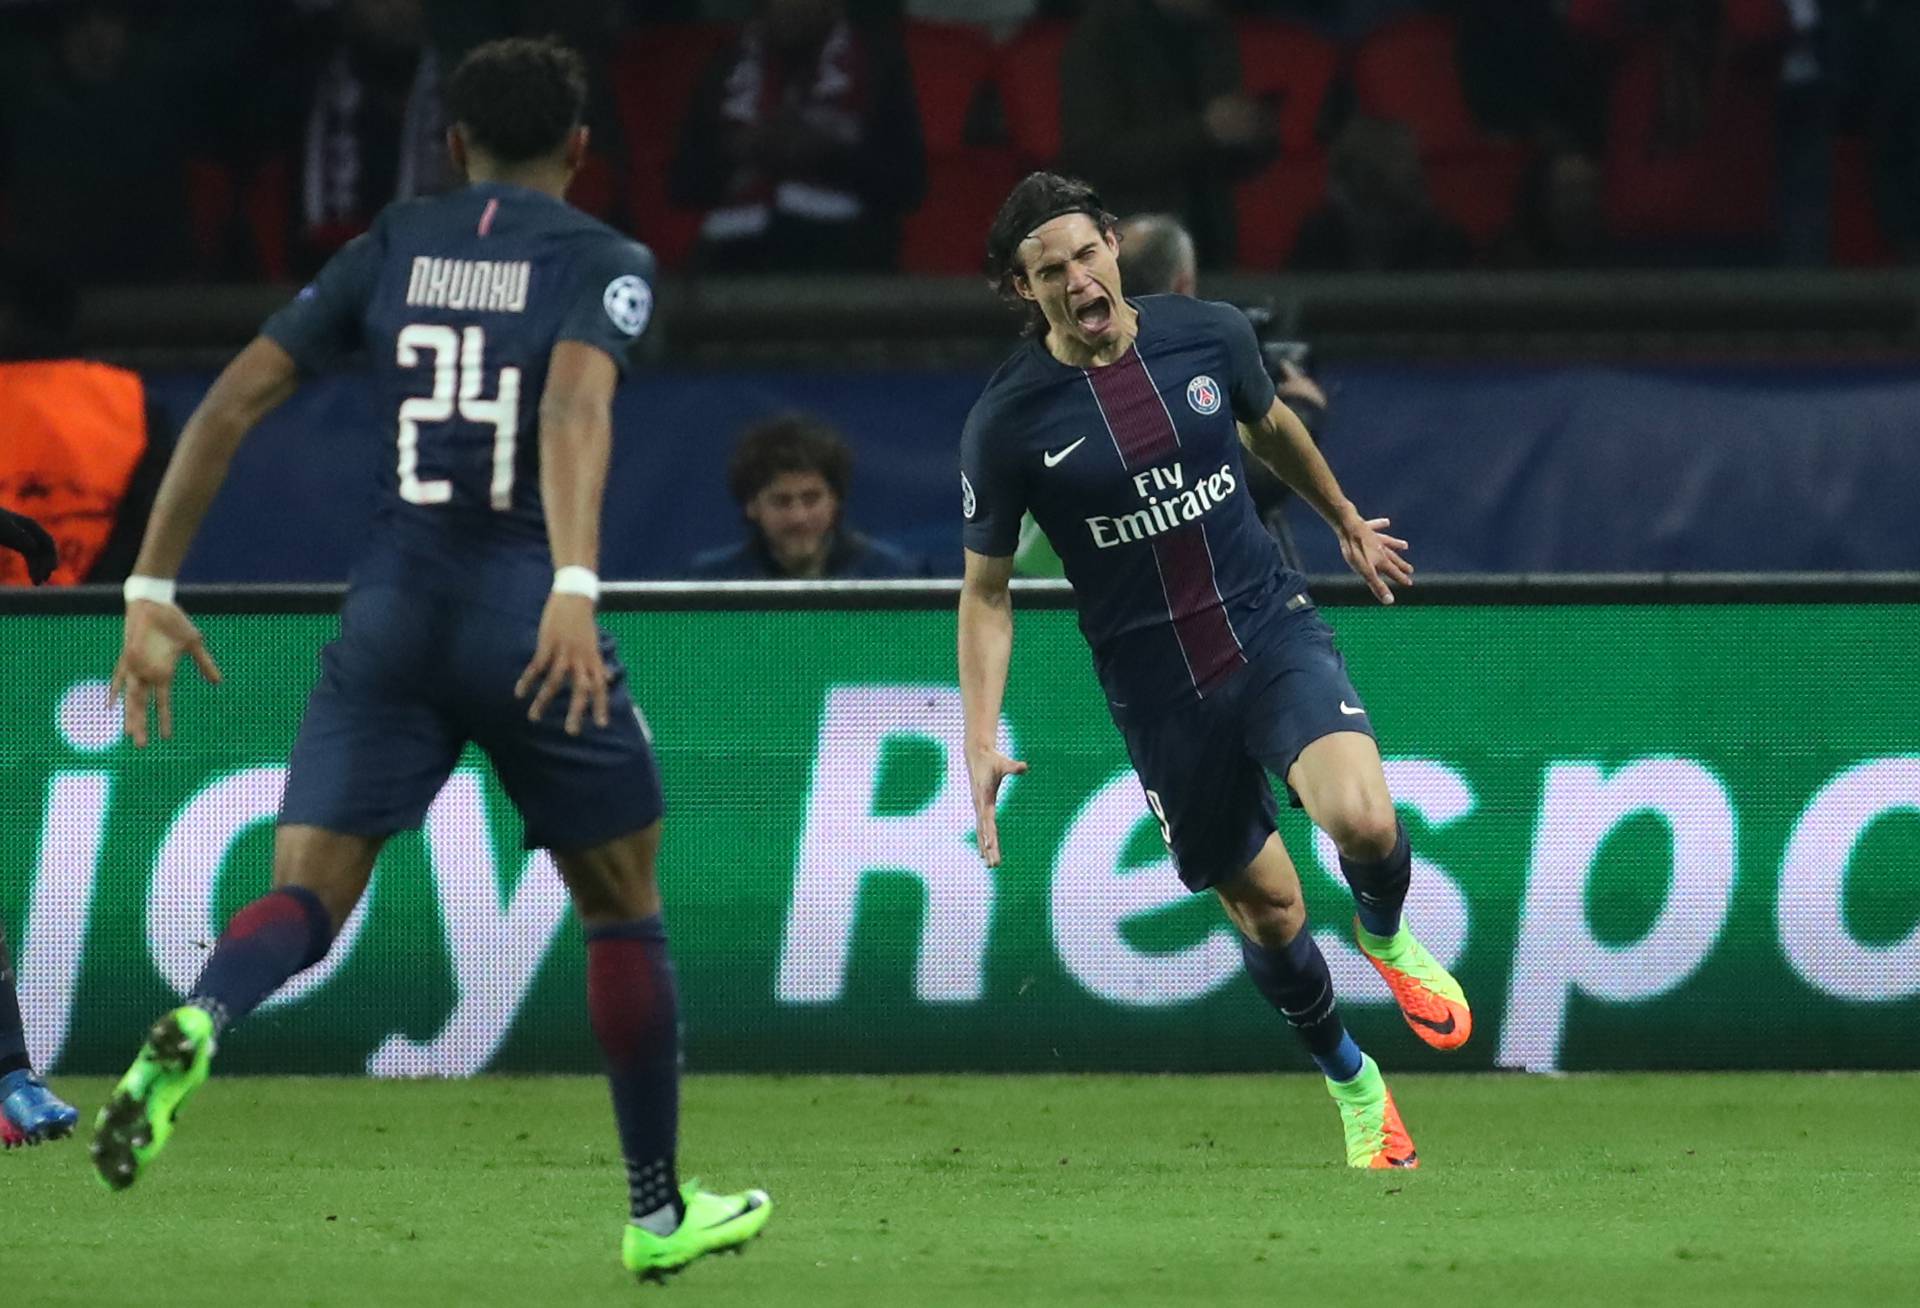 Paris Saint-Germain's Edinson Cavani celebrates scoring their fourth goal